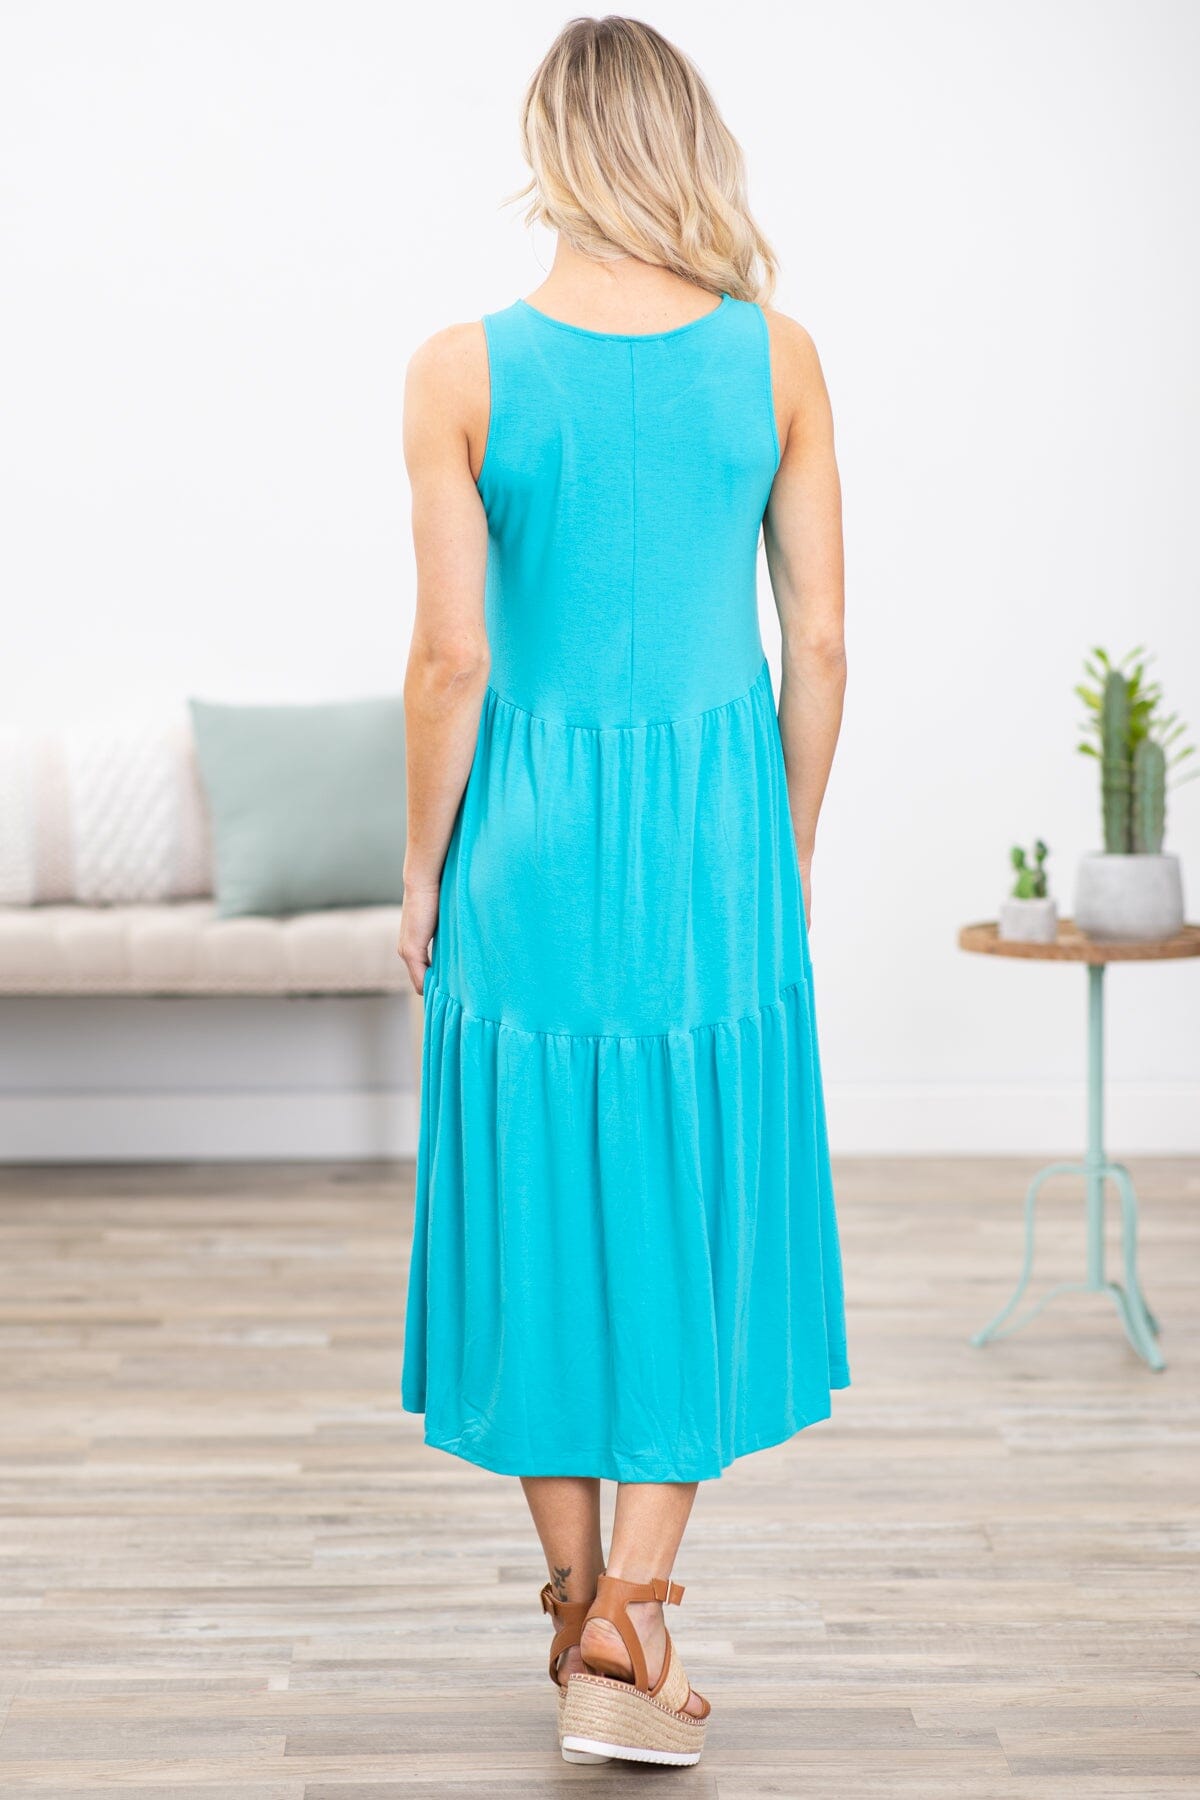 Aqua Tiered Skirt Sleeveless Midi Dress - Filly Flair